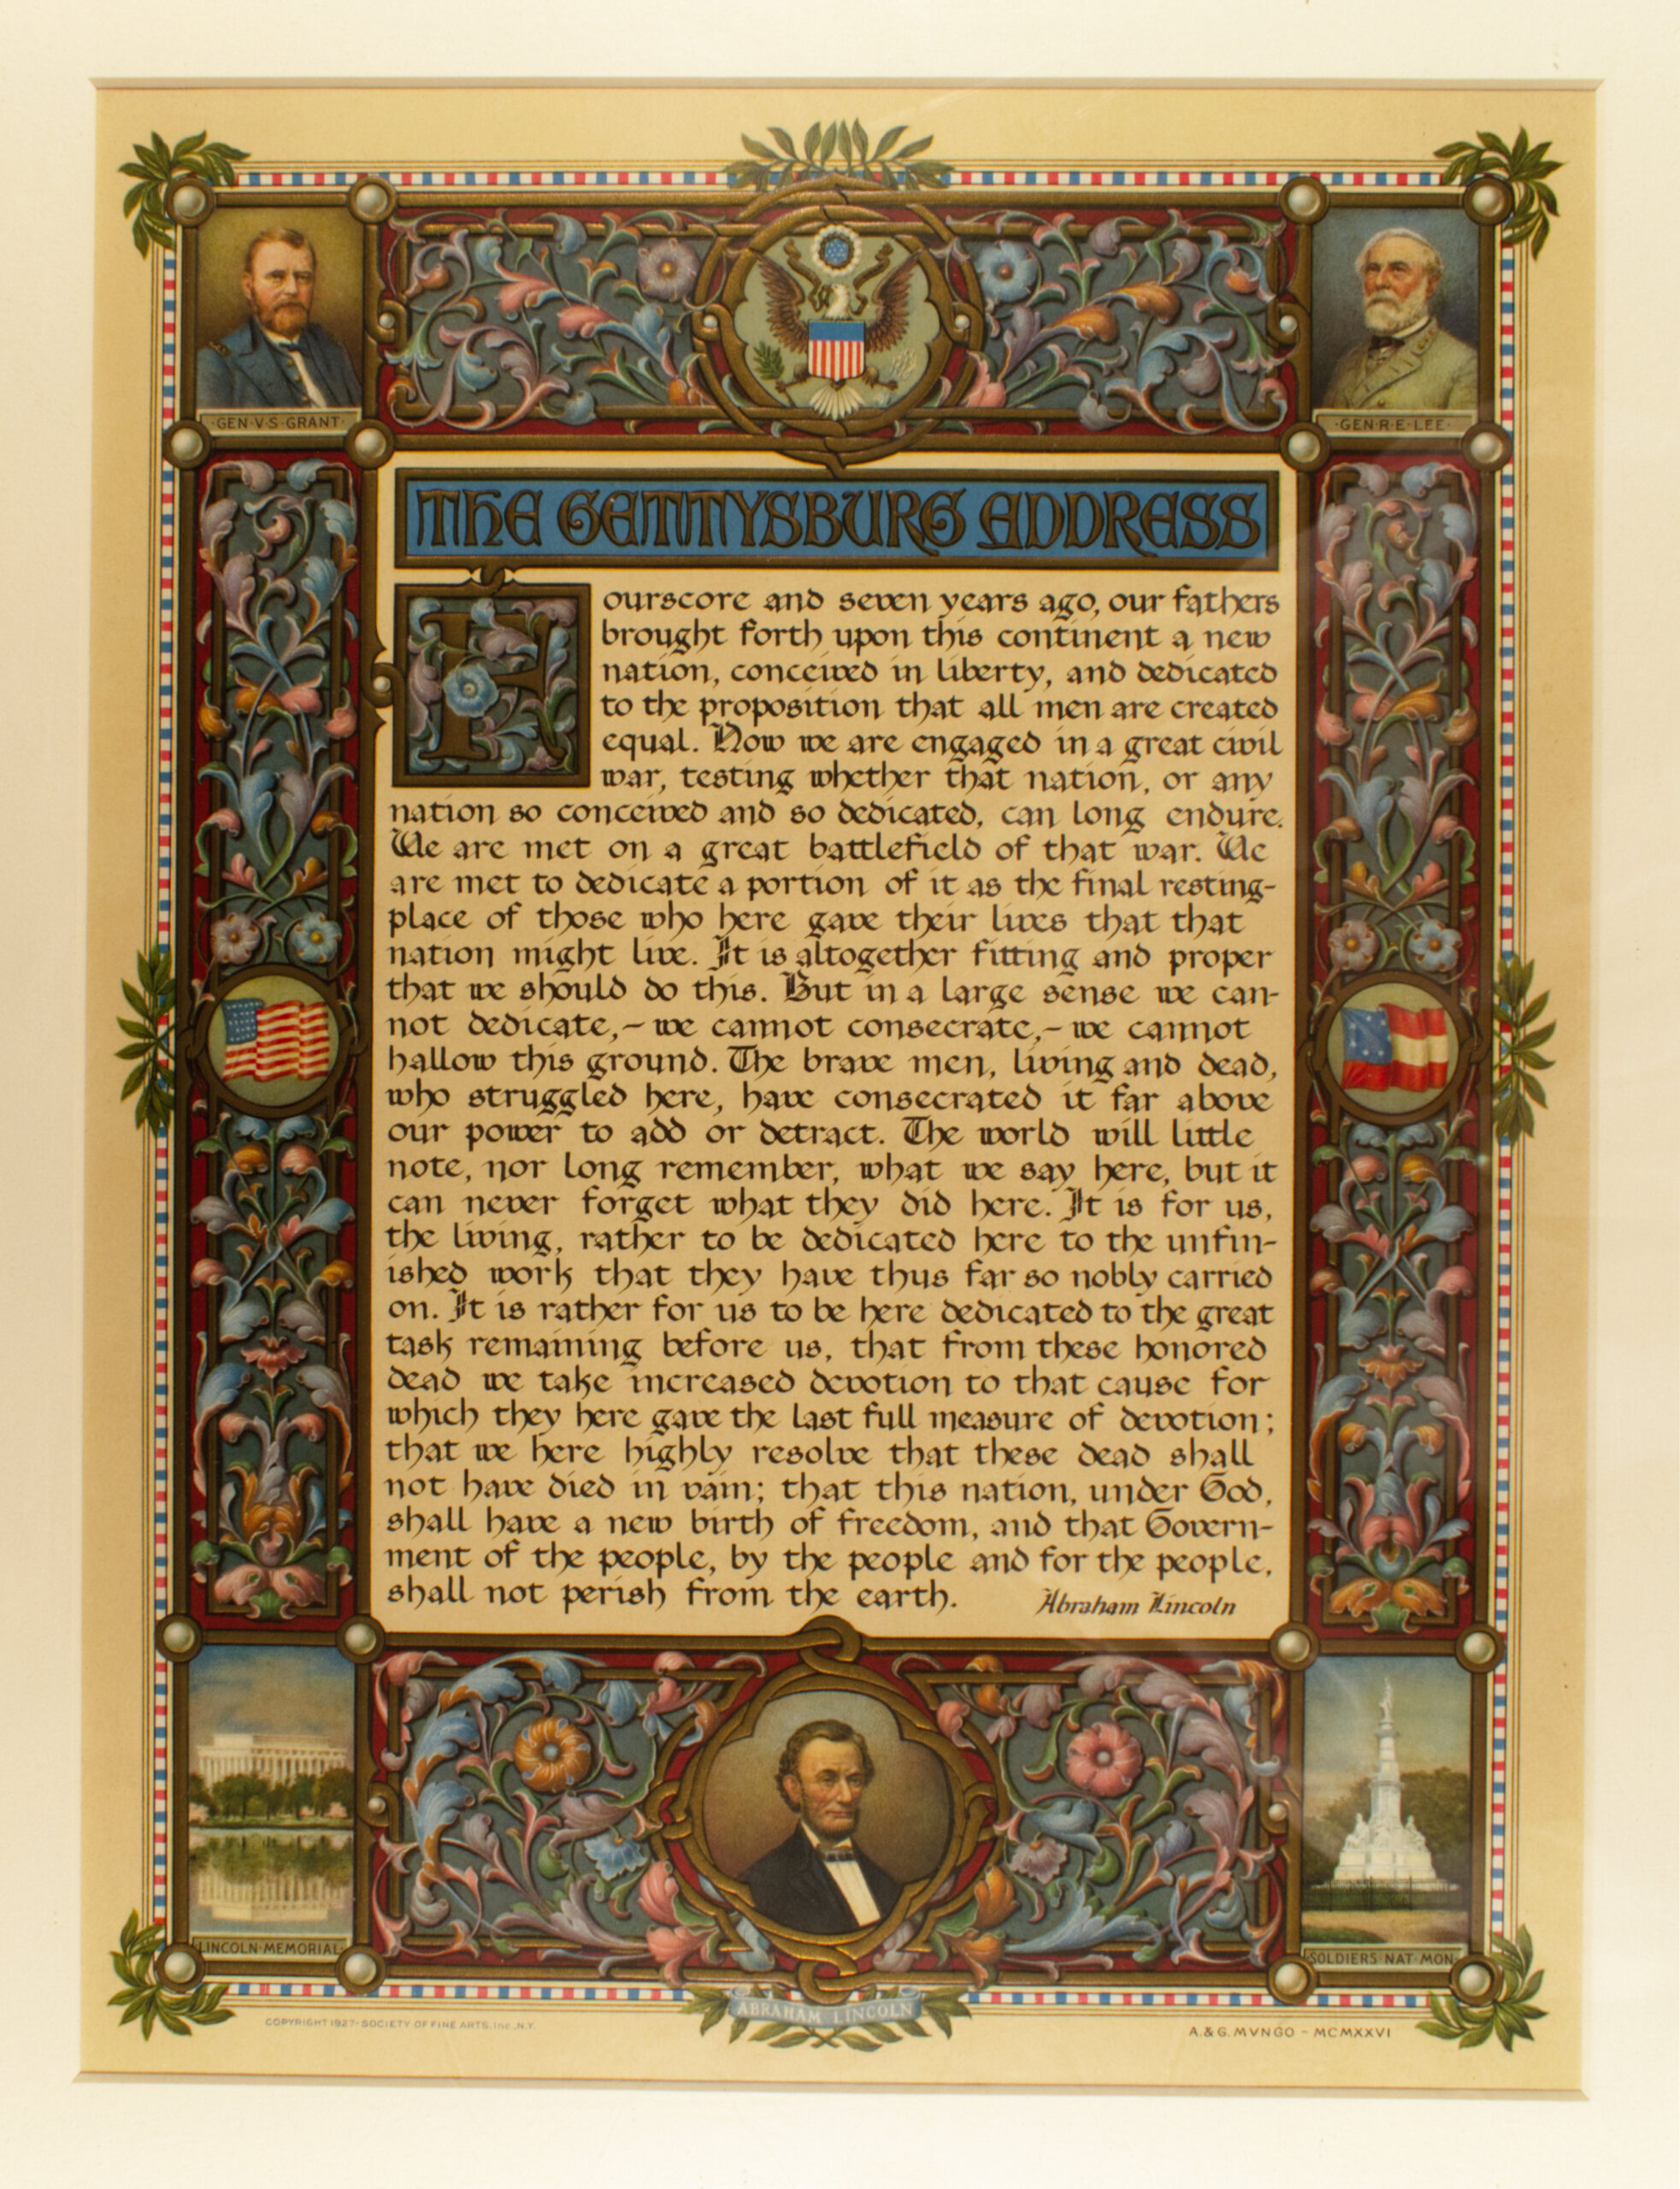 The Gettysburg Address [broadside]. A & G Mungo, 1926. New York: the Society of Fine Arts, copyright 1927.